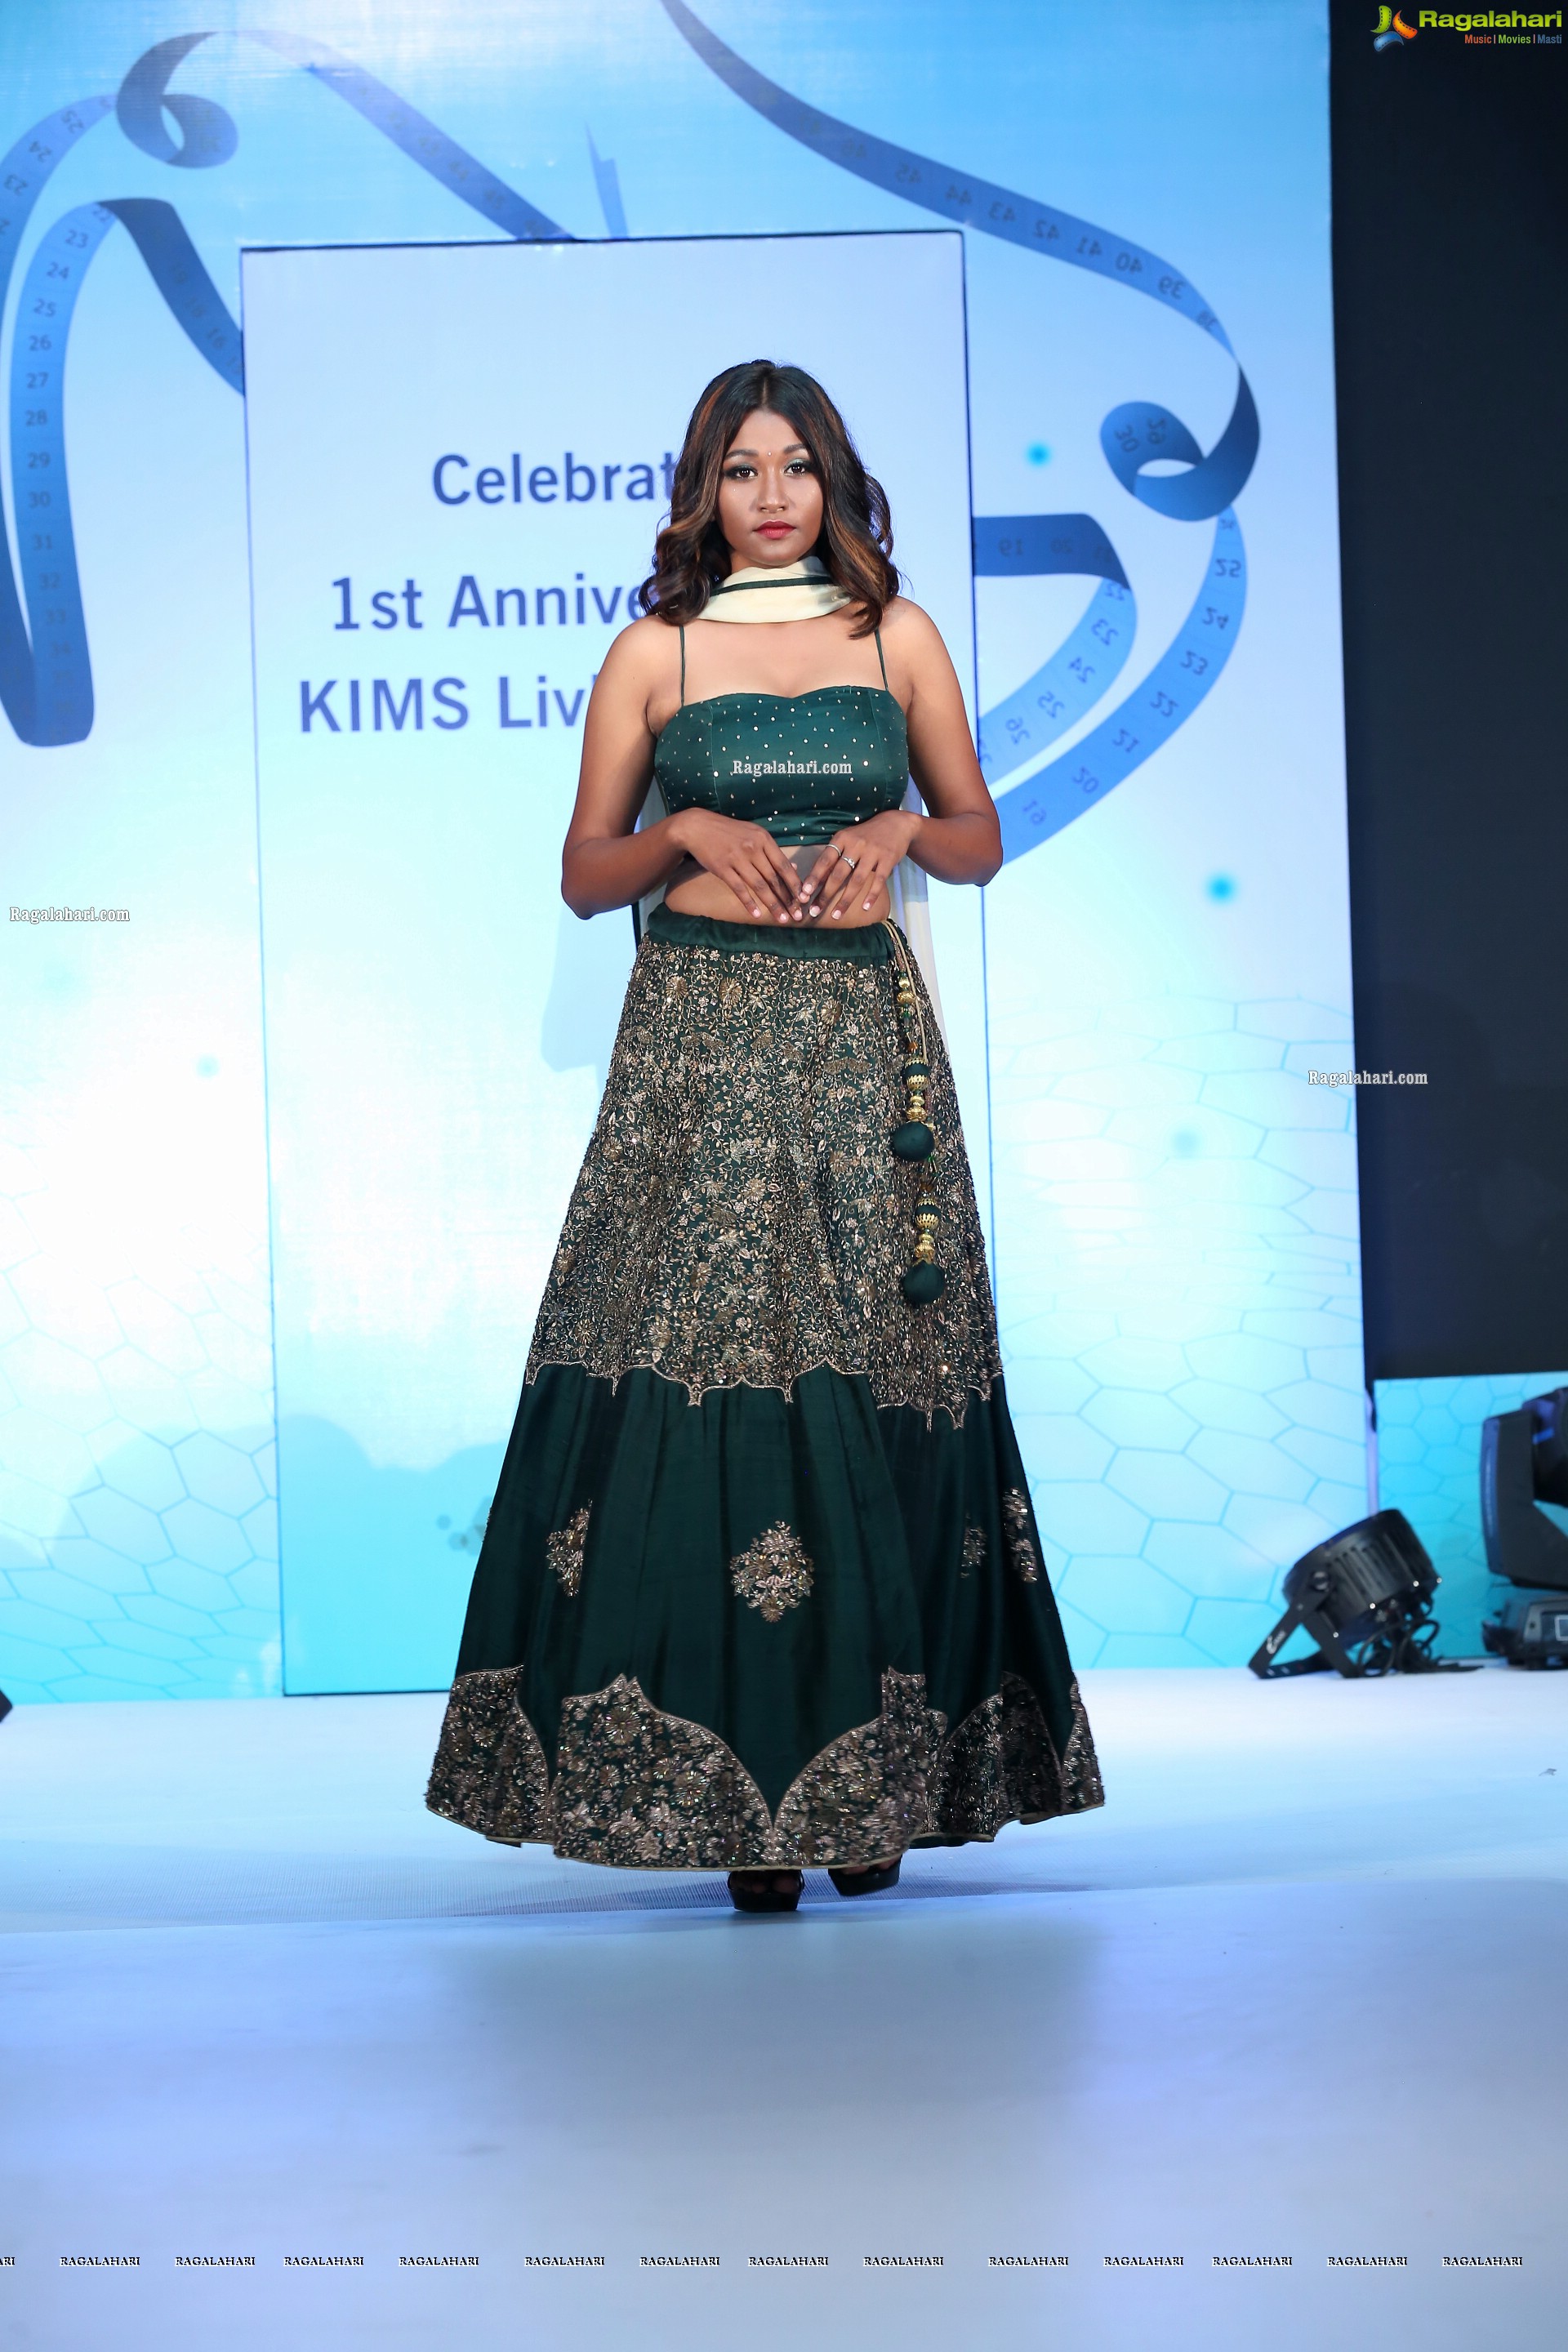 Ankita Chatterjee @ KIMS LivLife Centre 1st Anniversary Celebrations - HD Gallery